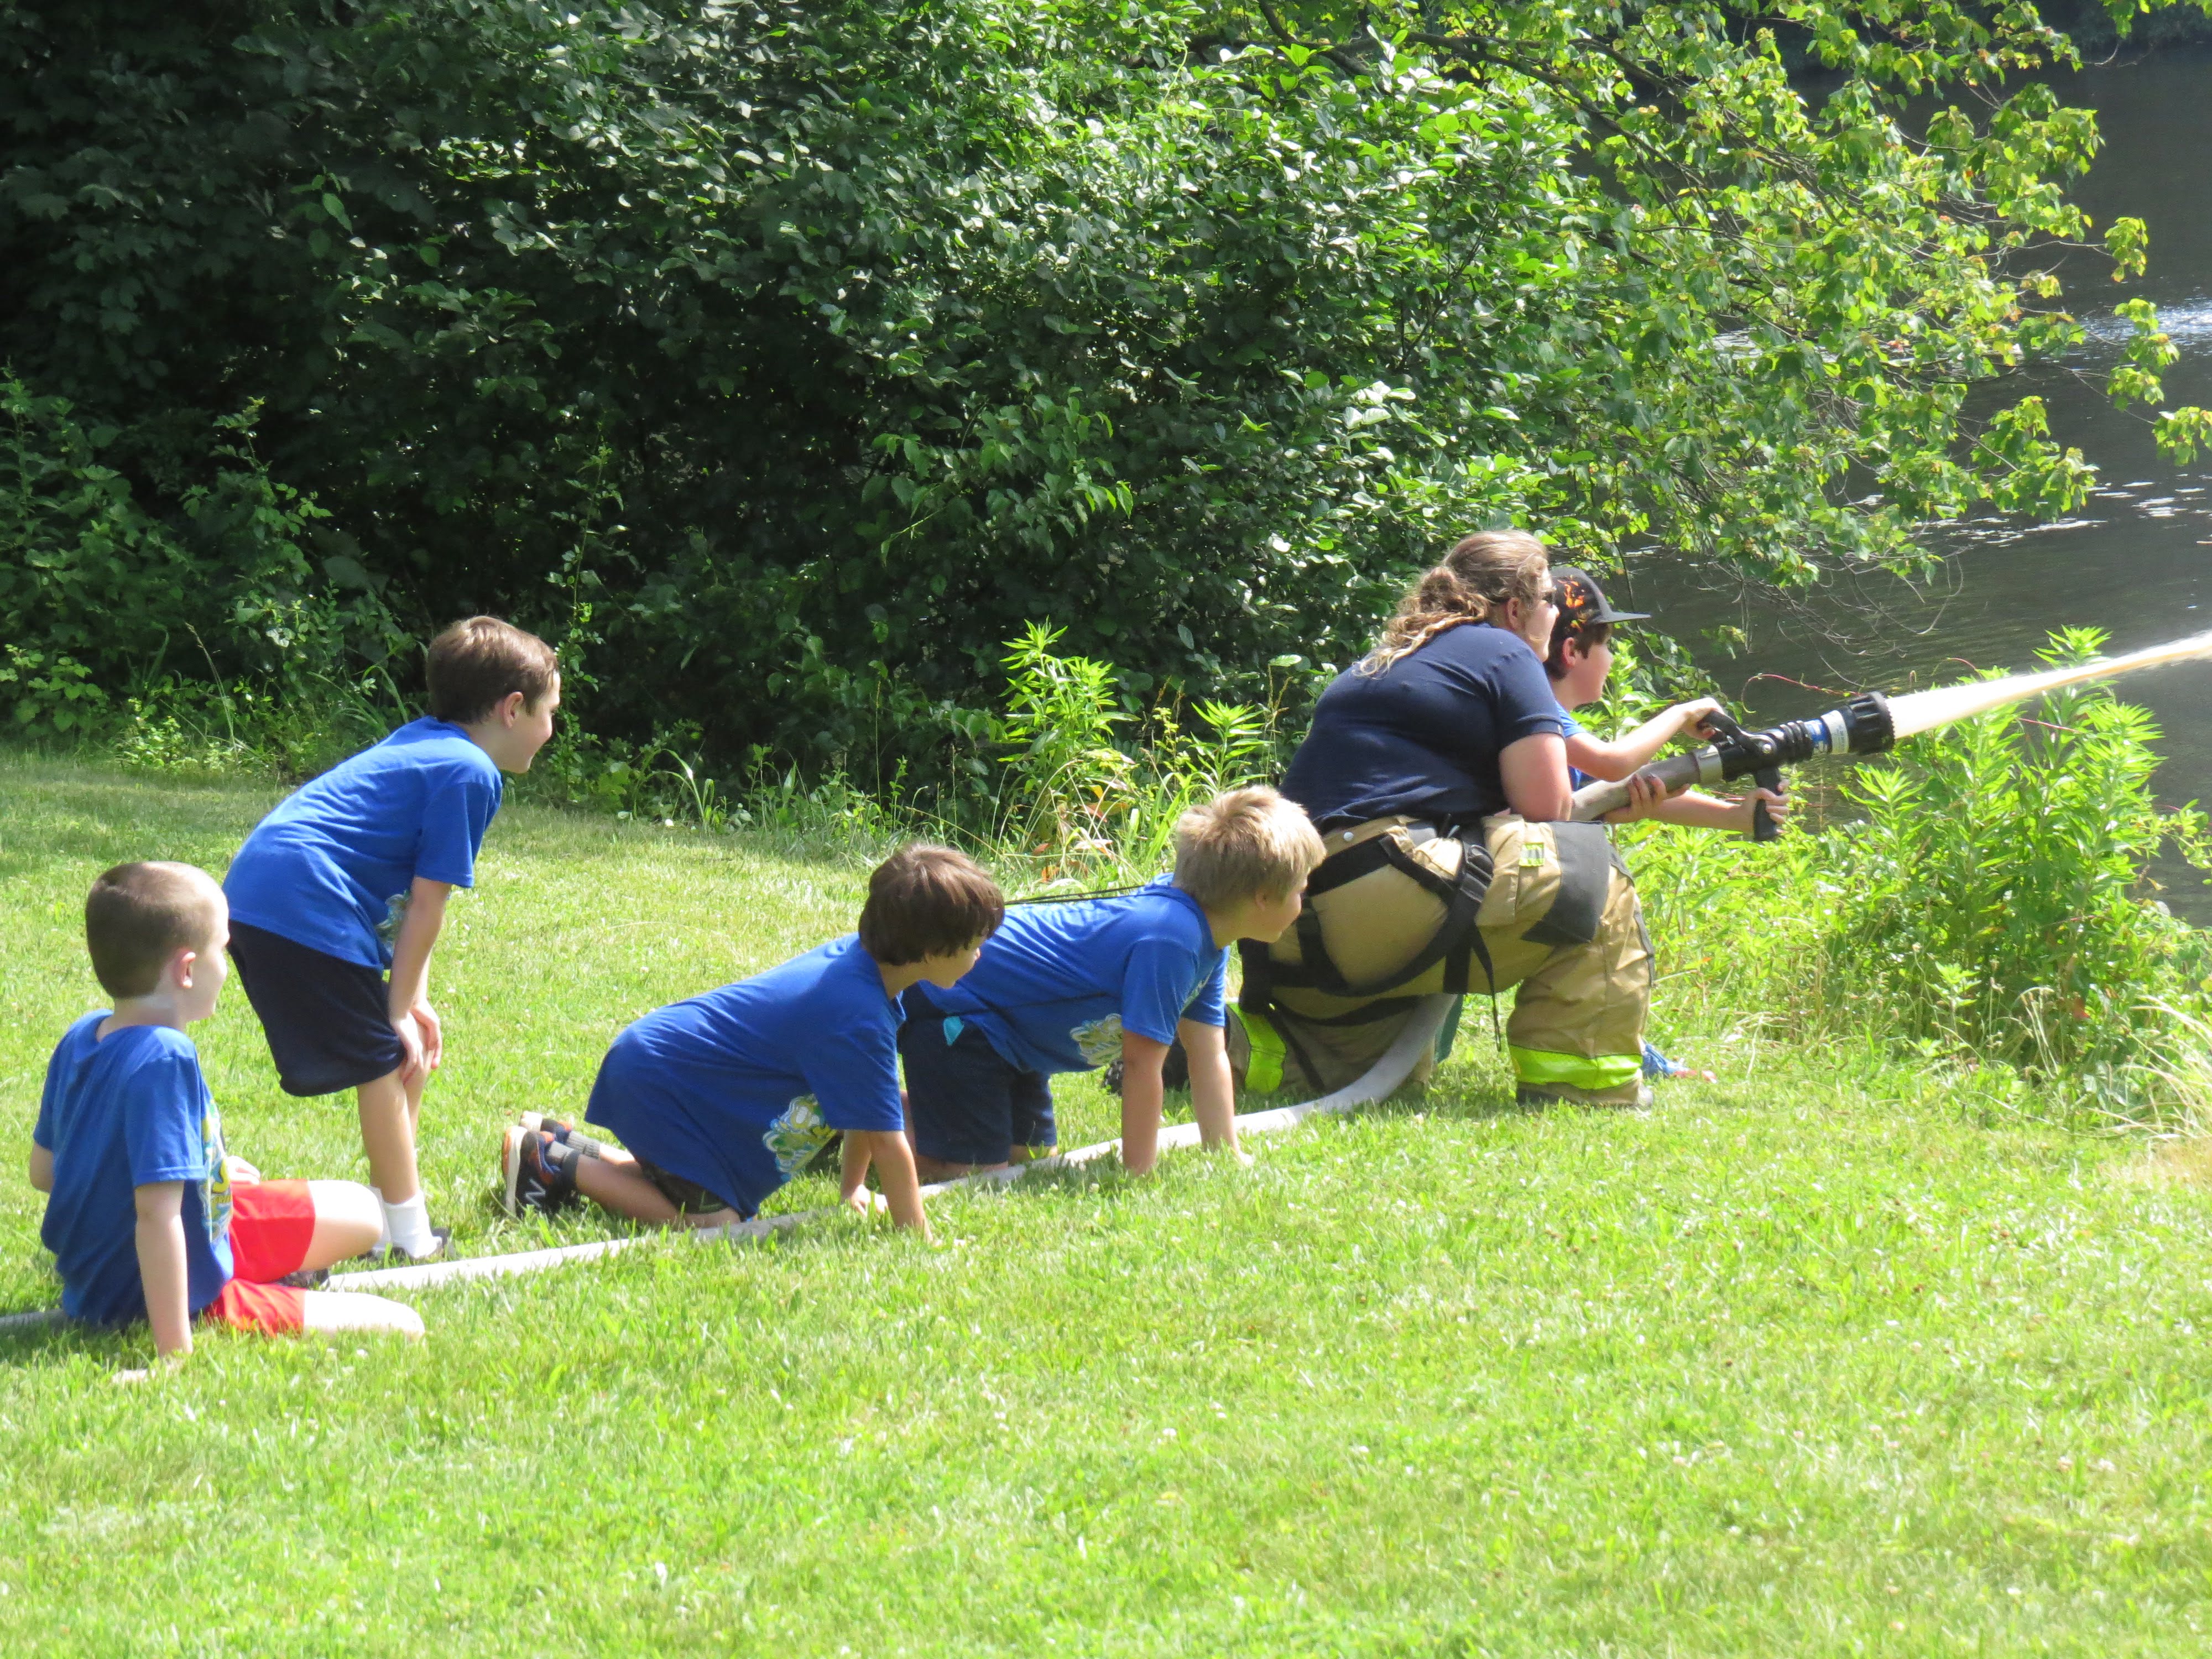 Cub scouts practice spraying a fire hose. June 30, 2017. Photo: Devon Bedoya